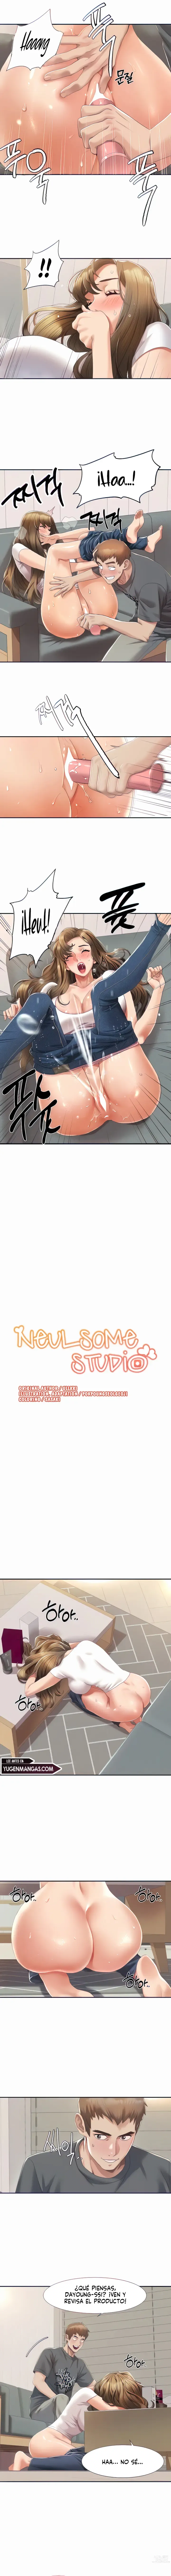 Page 56 of manga Neulsom Studio